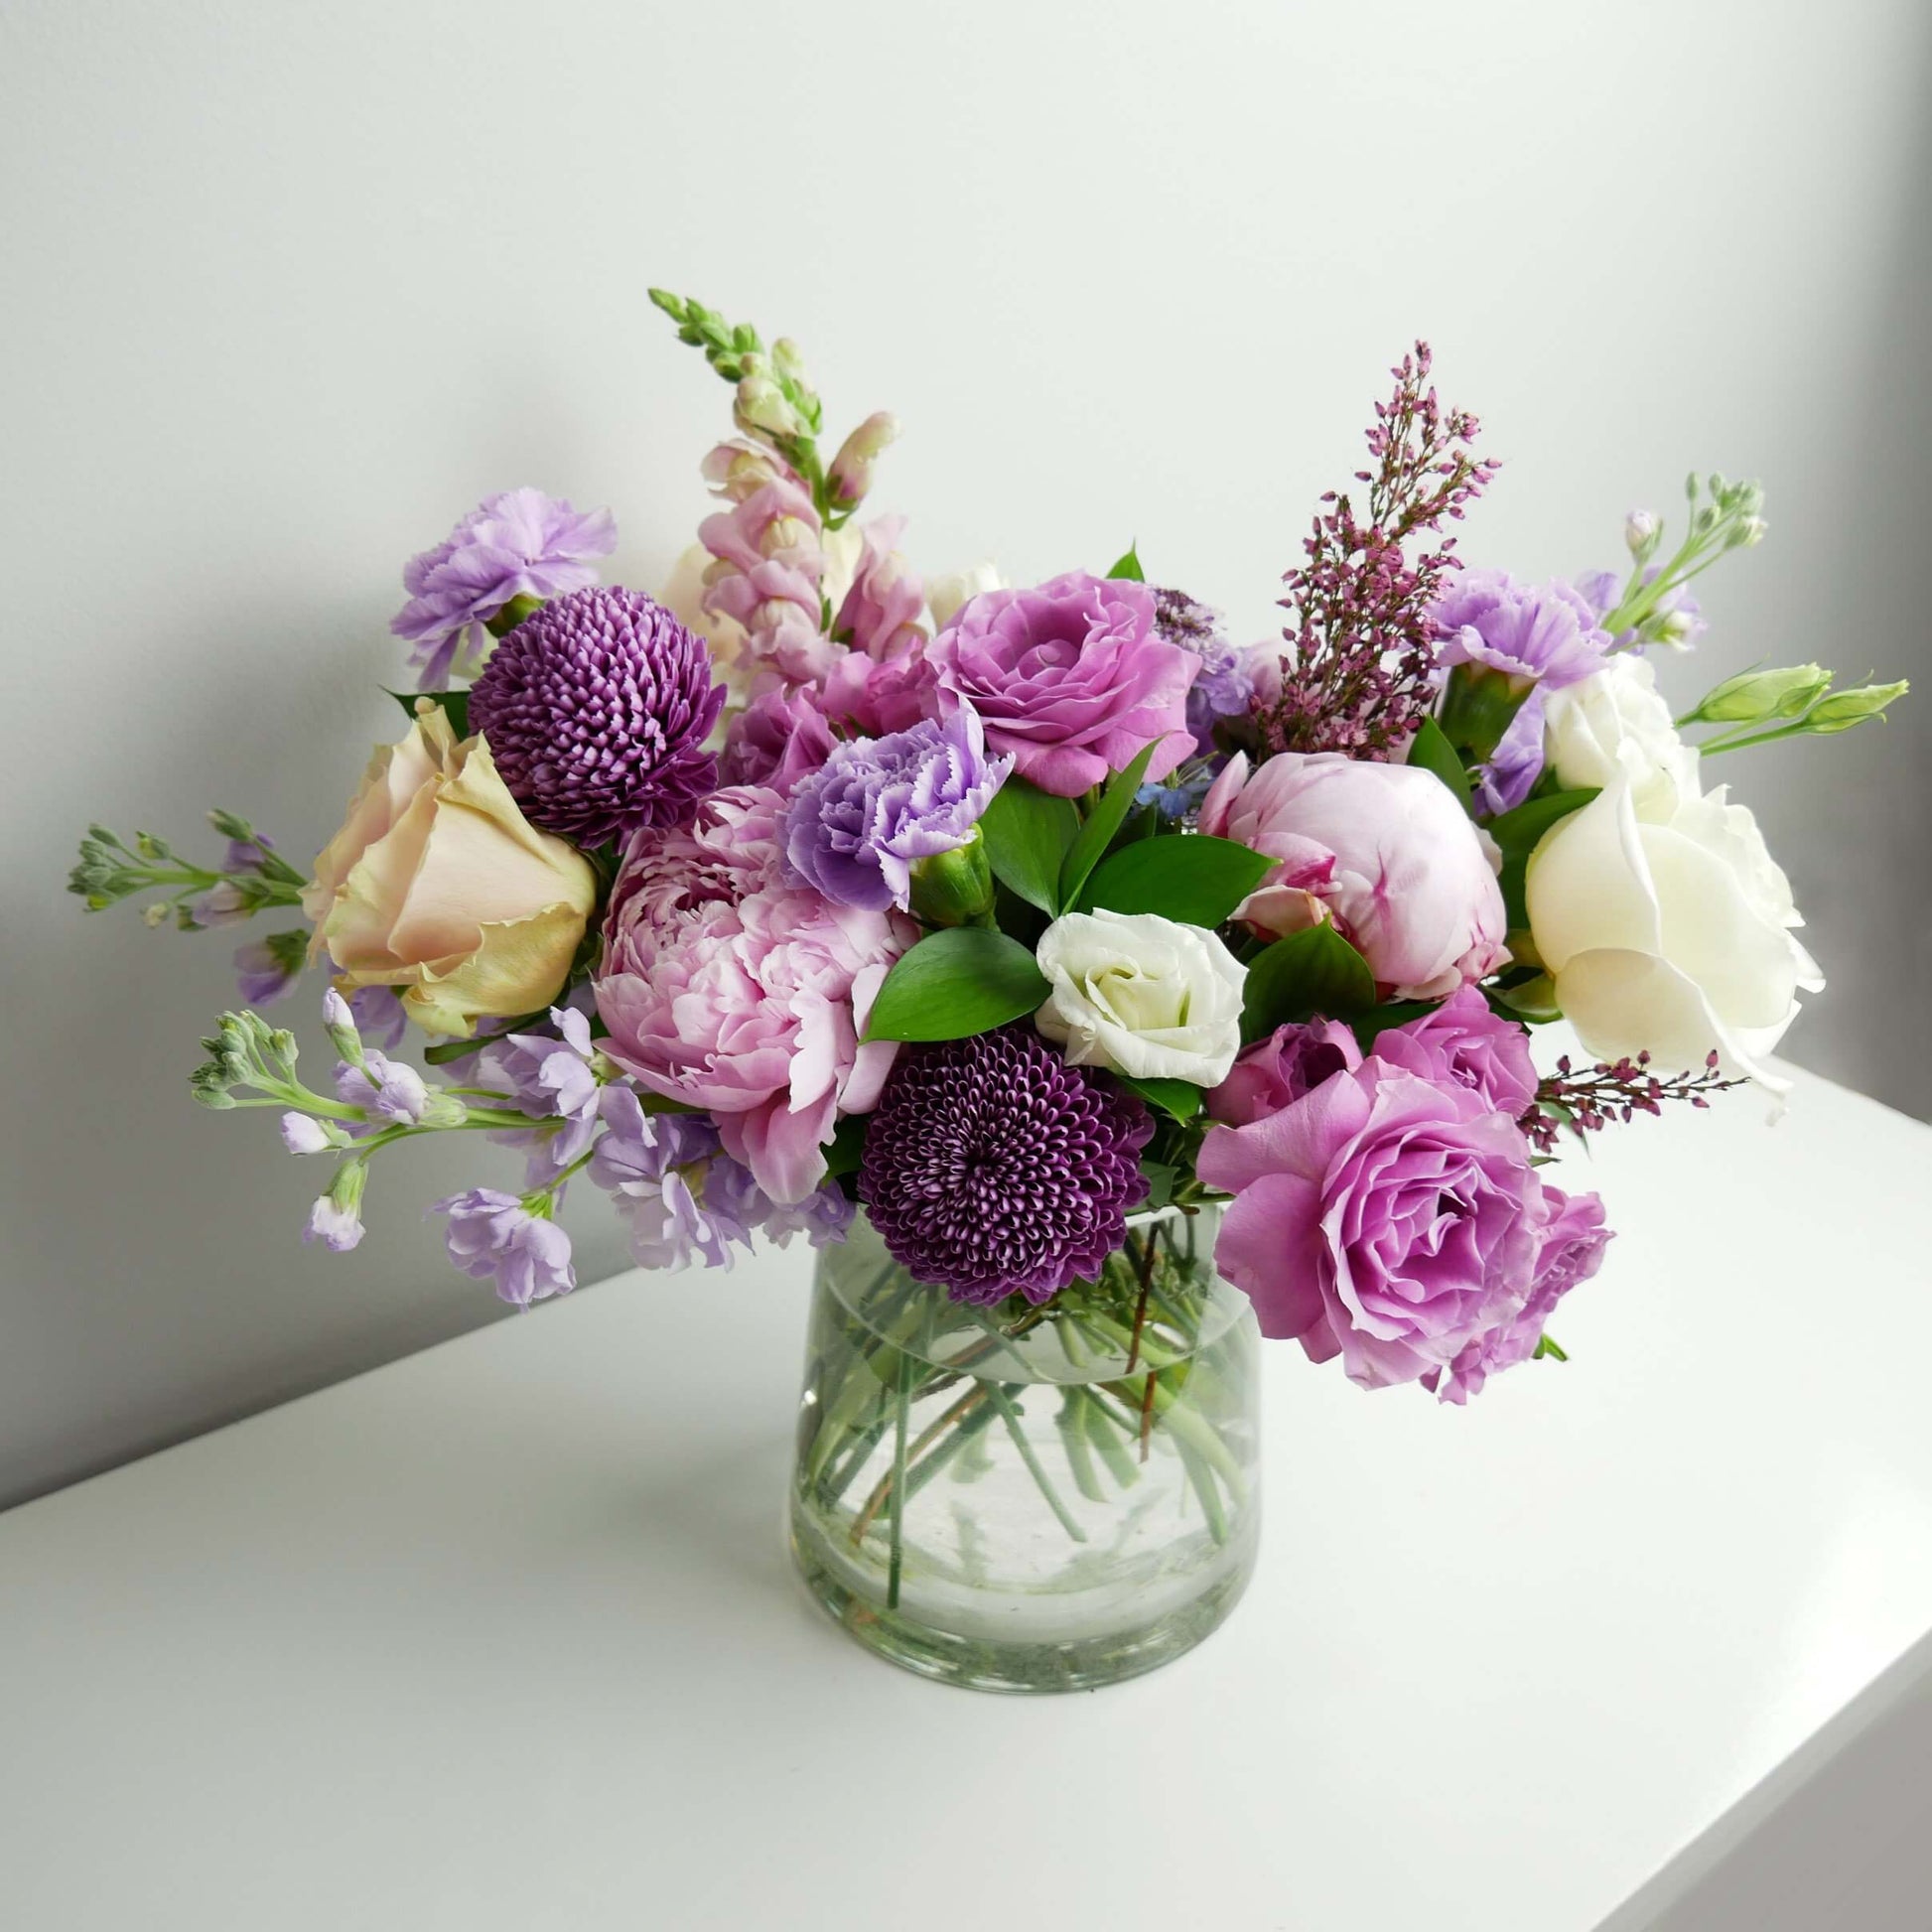 White and purple arrangement in vase